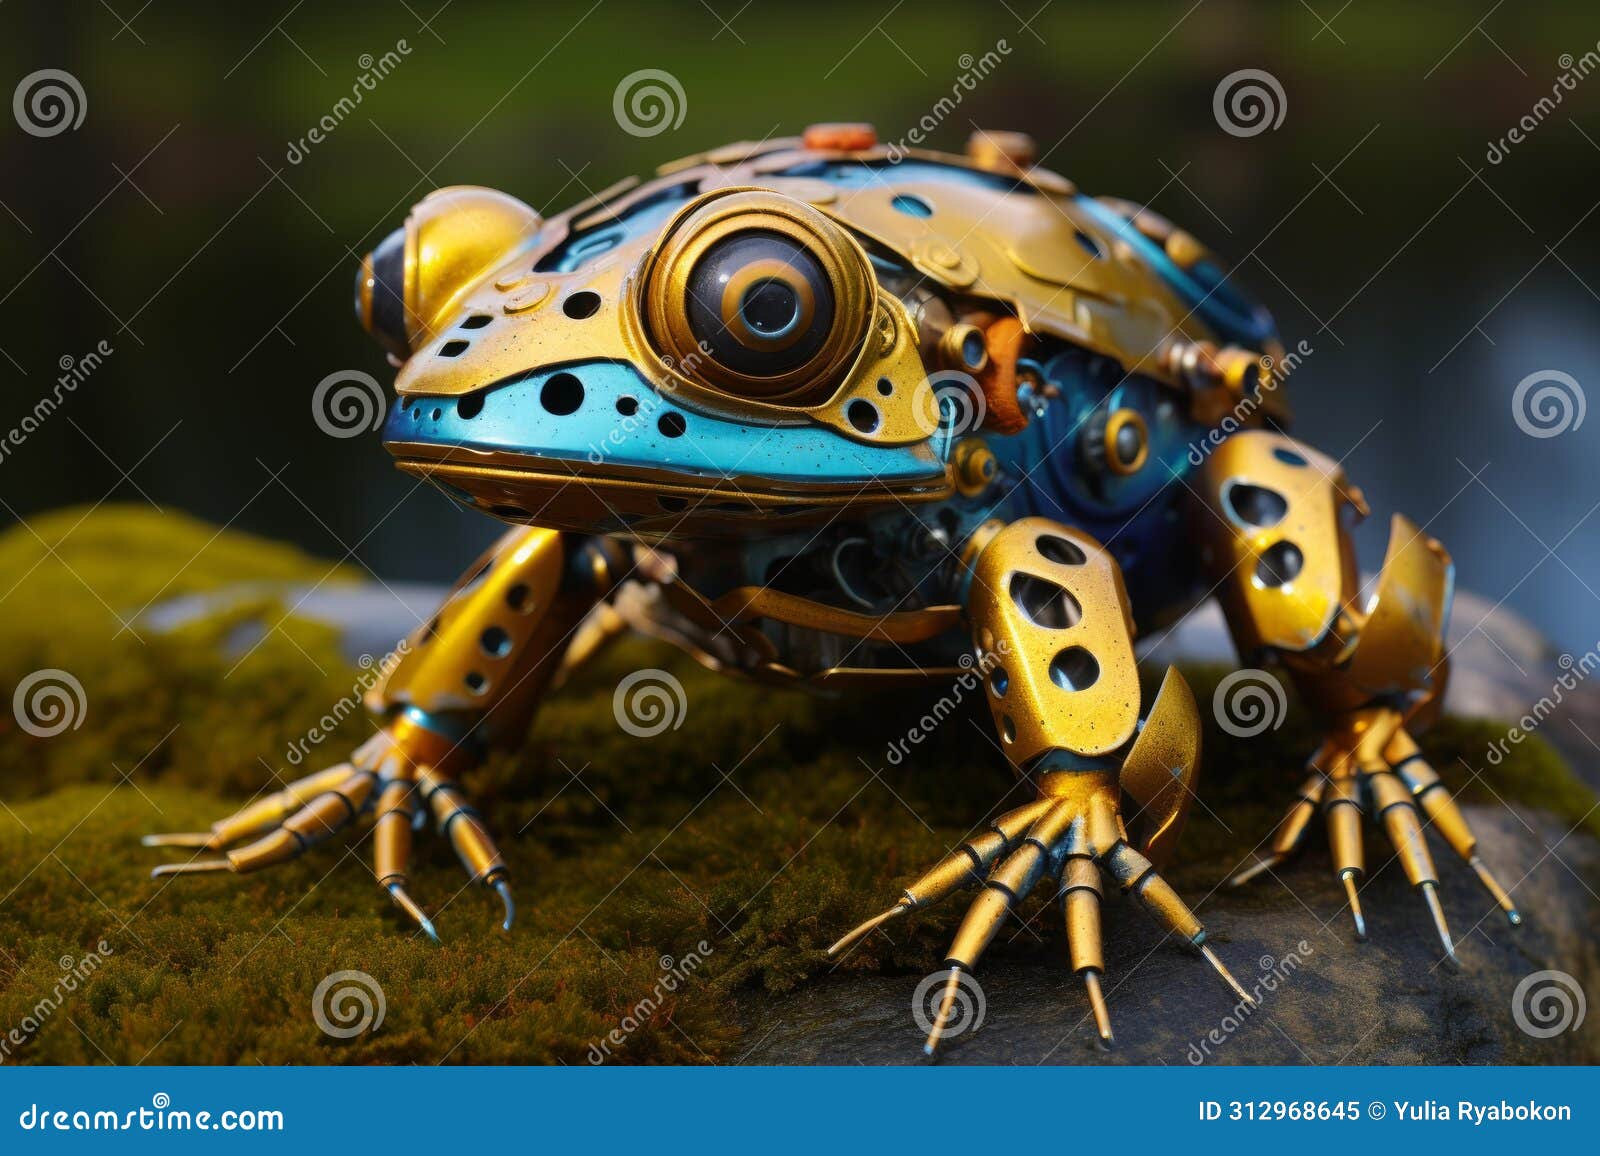 sleek robotized modern frog. generate ai